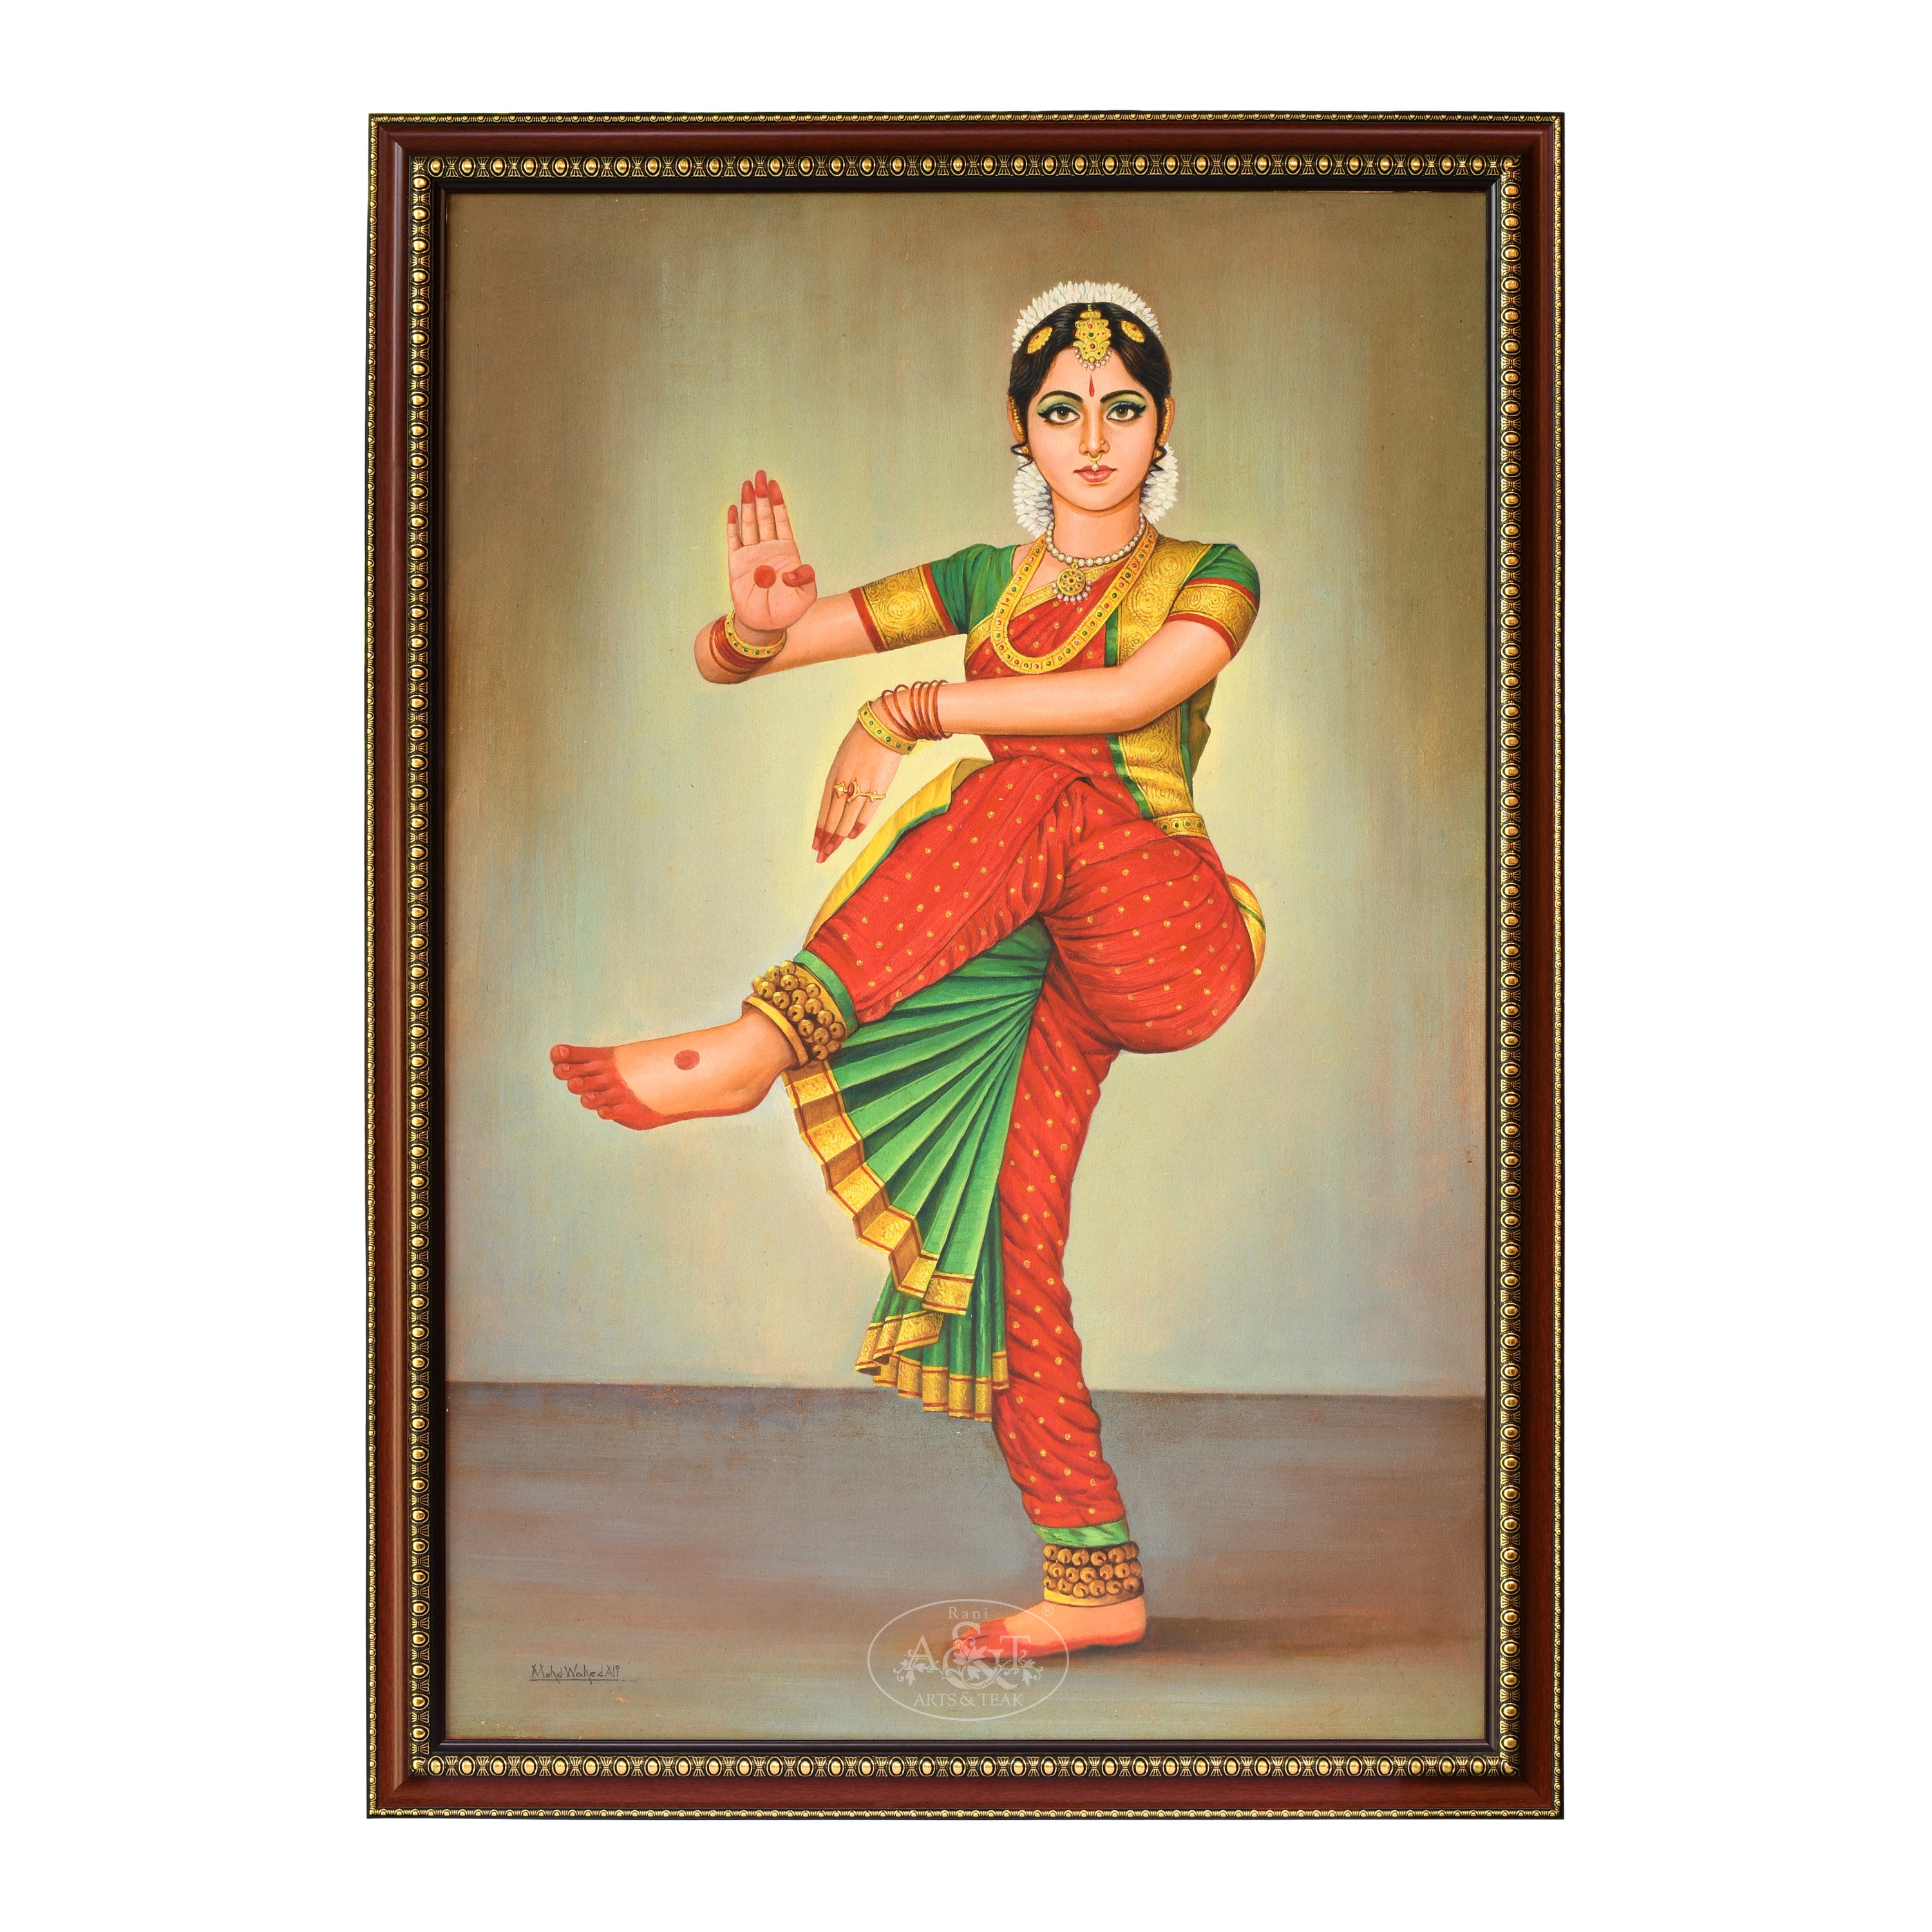 Buy Bharathanatyam poses Handmade Painting by BALAJI G. Code:ART_4292_49679  - Paintings for Sale online in India.